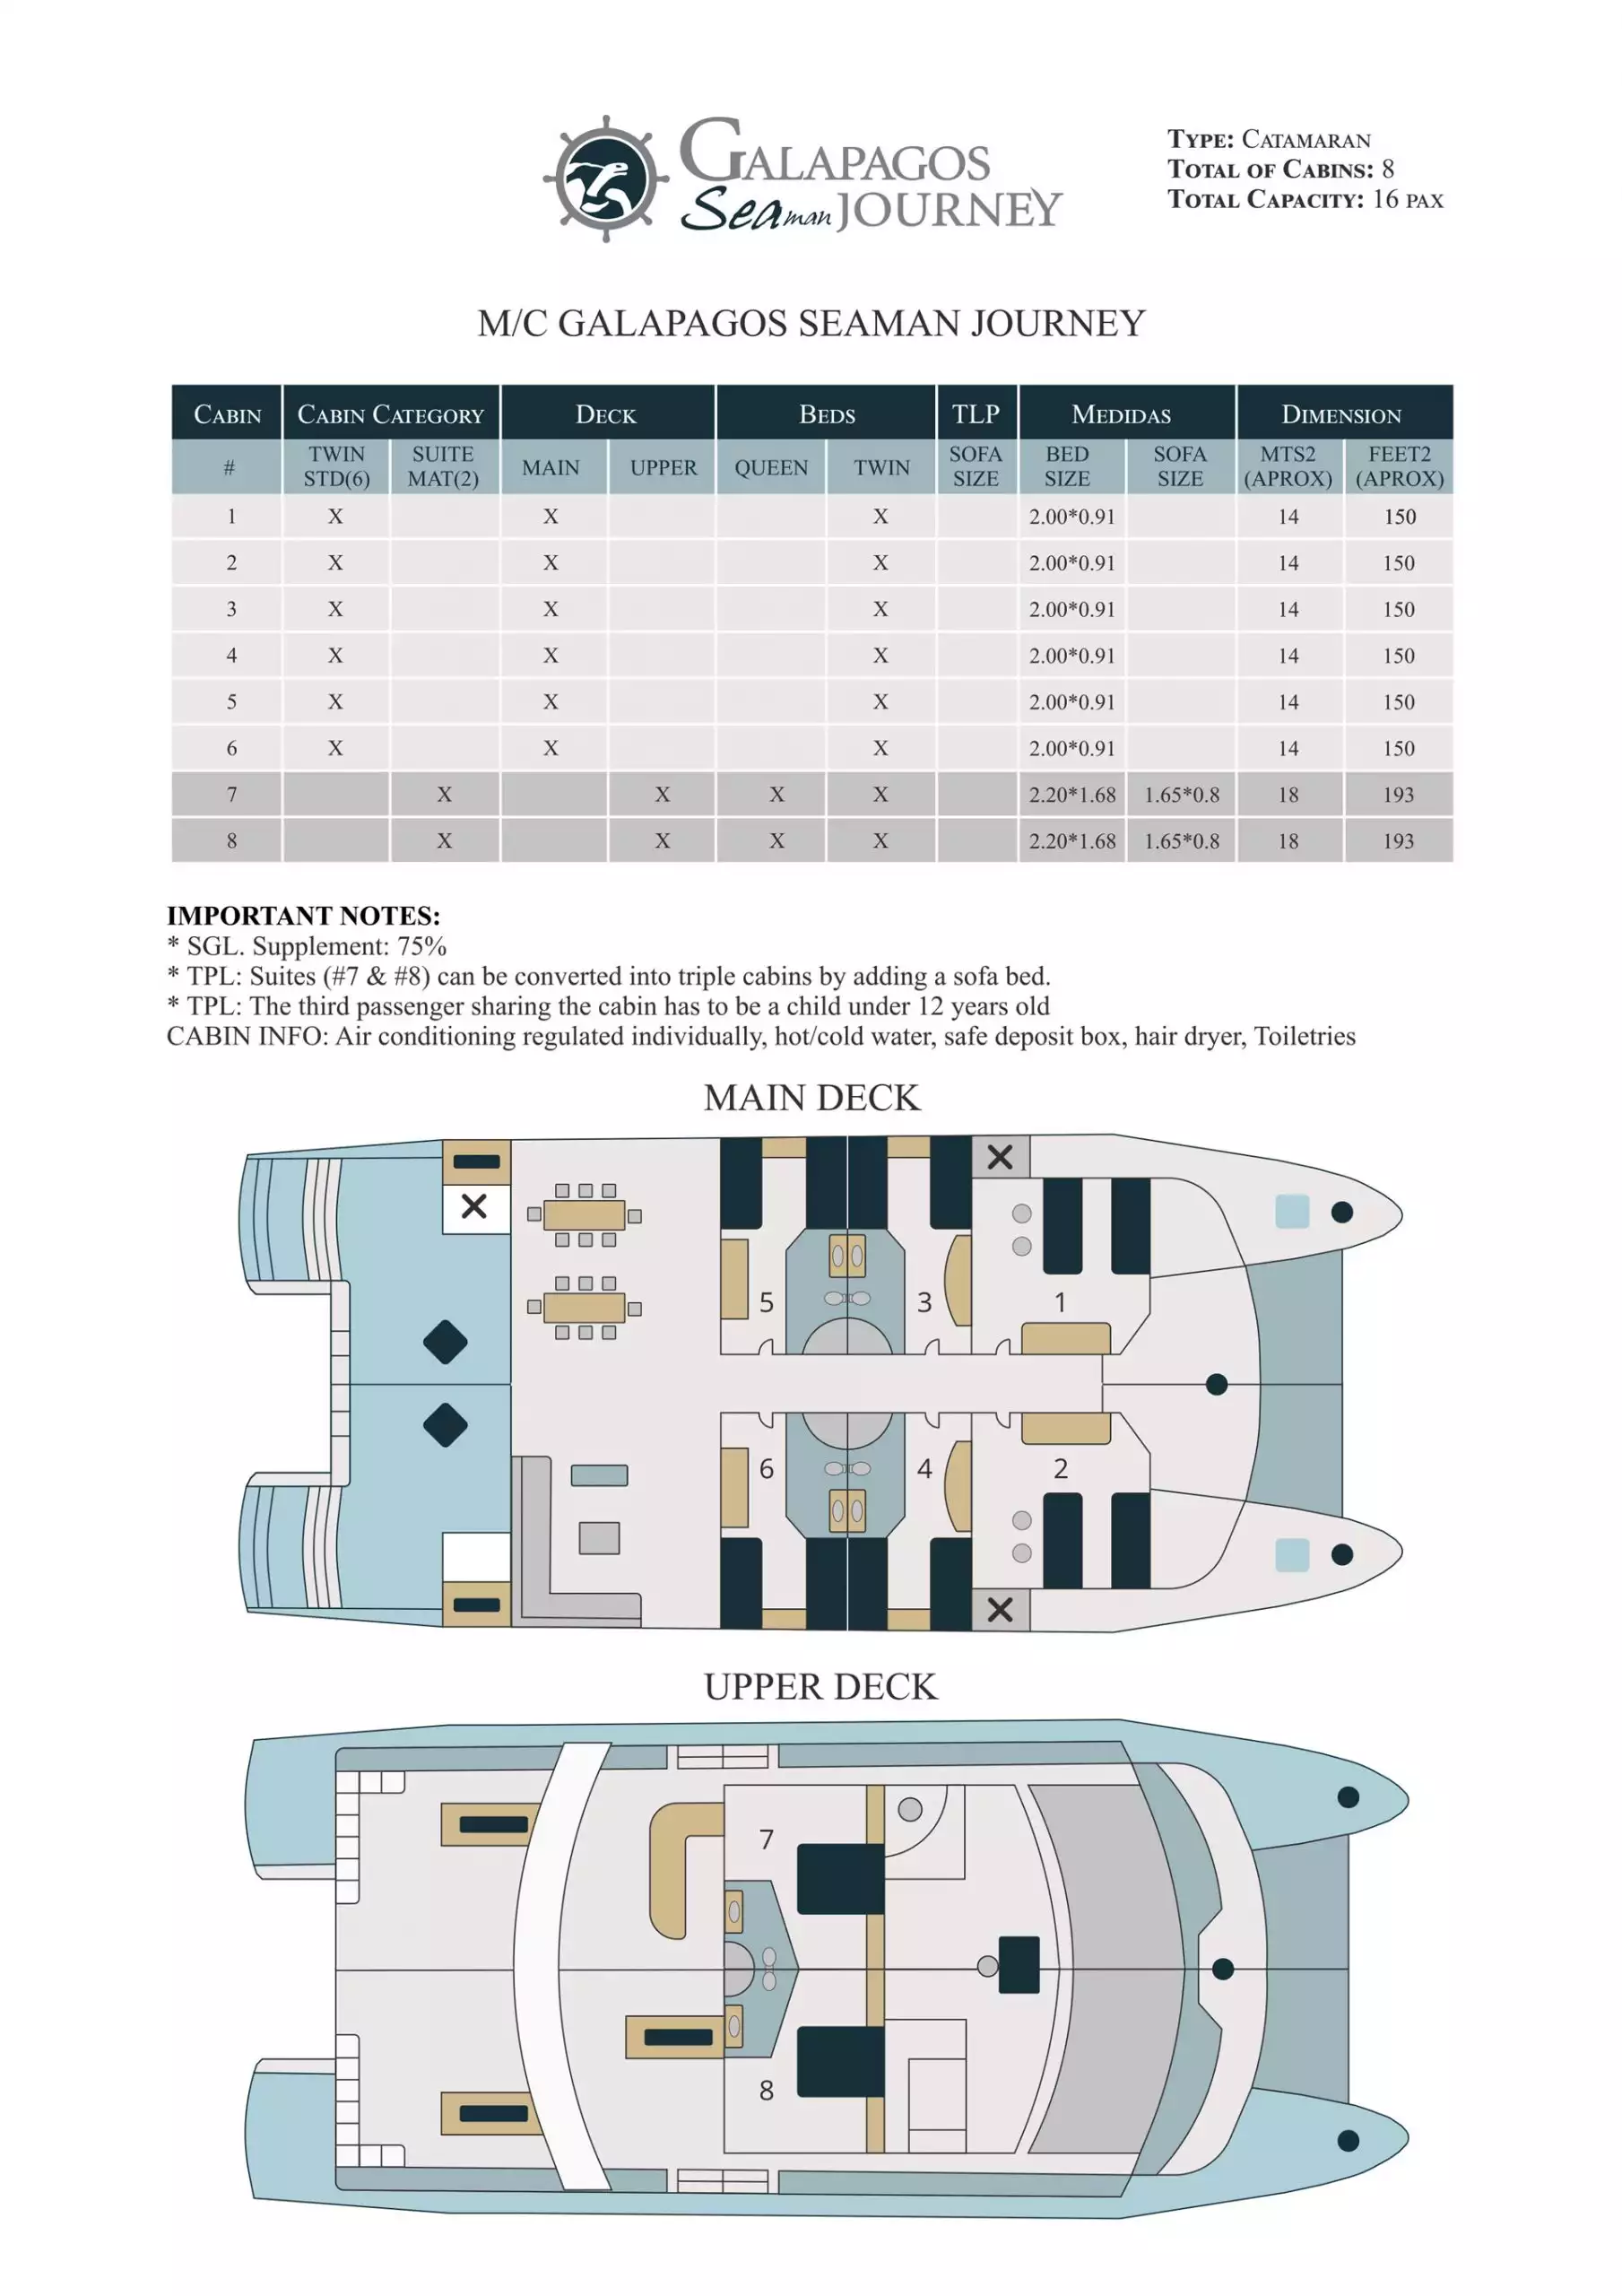 Deck plan detailing Main Deck and Upper Deck of Seaman Journey catamaran in the Galapagos Islands